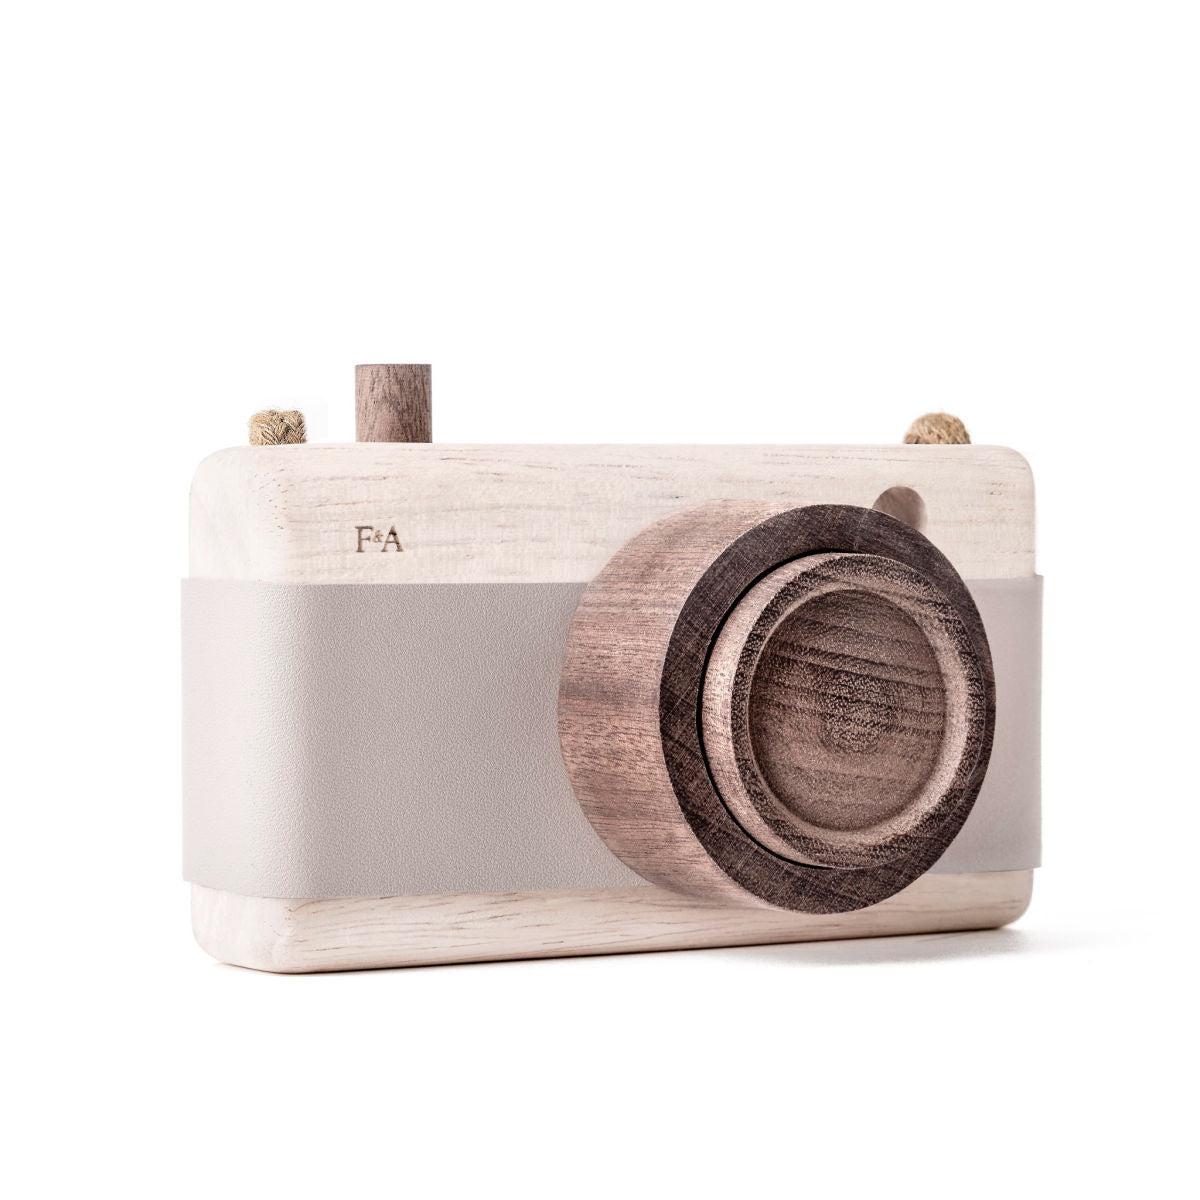 fanny & alexander wooden toy camera in grey lilac